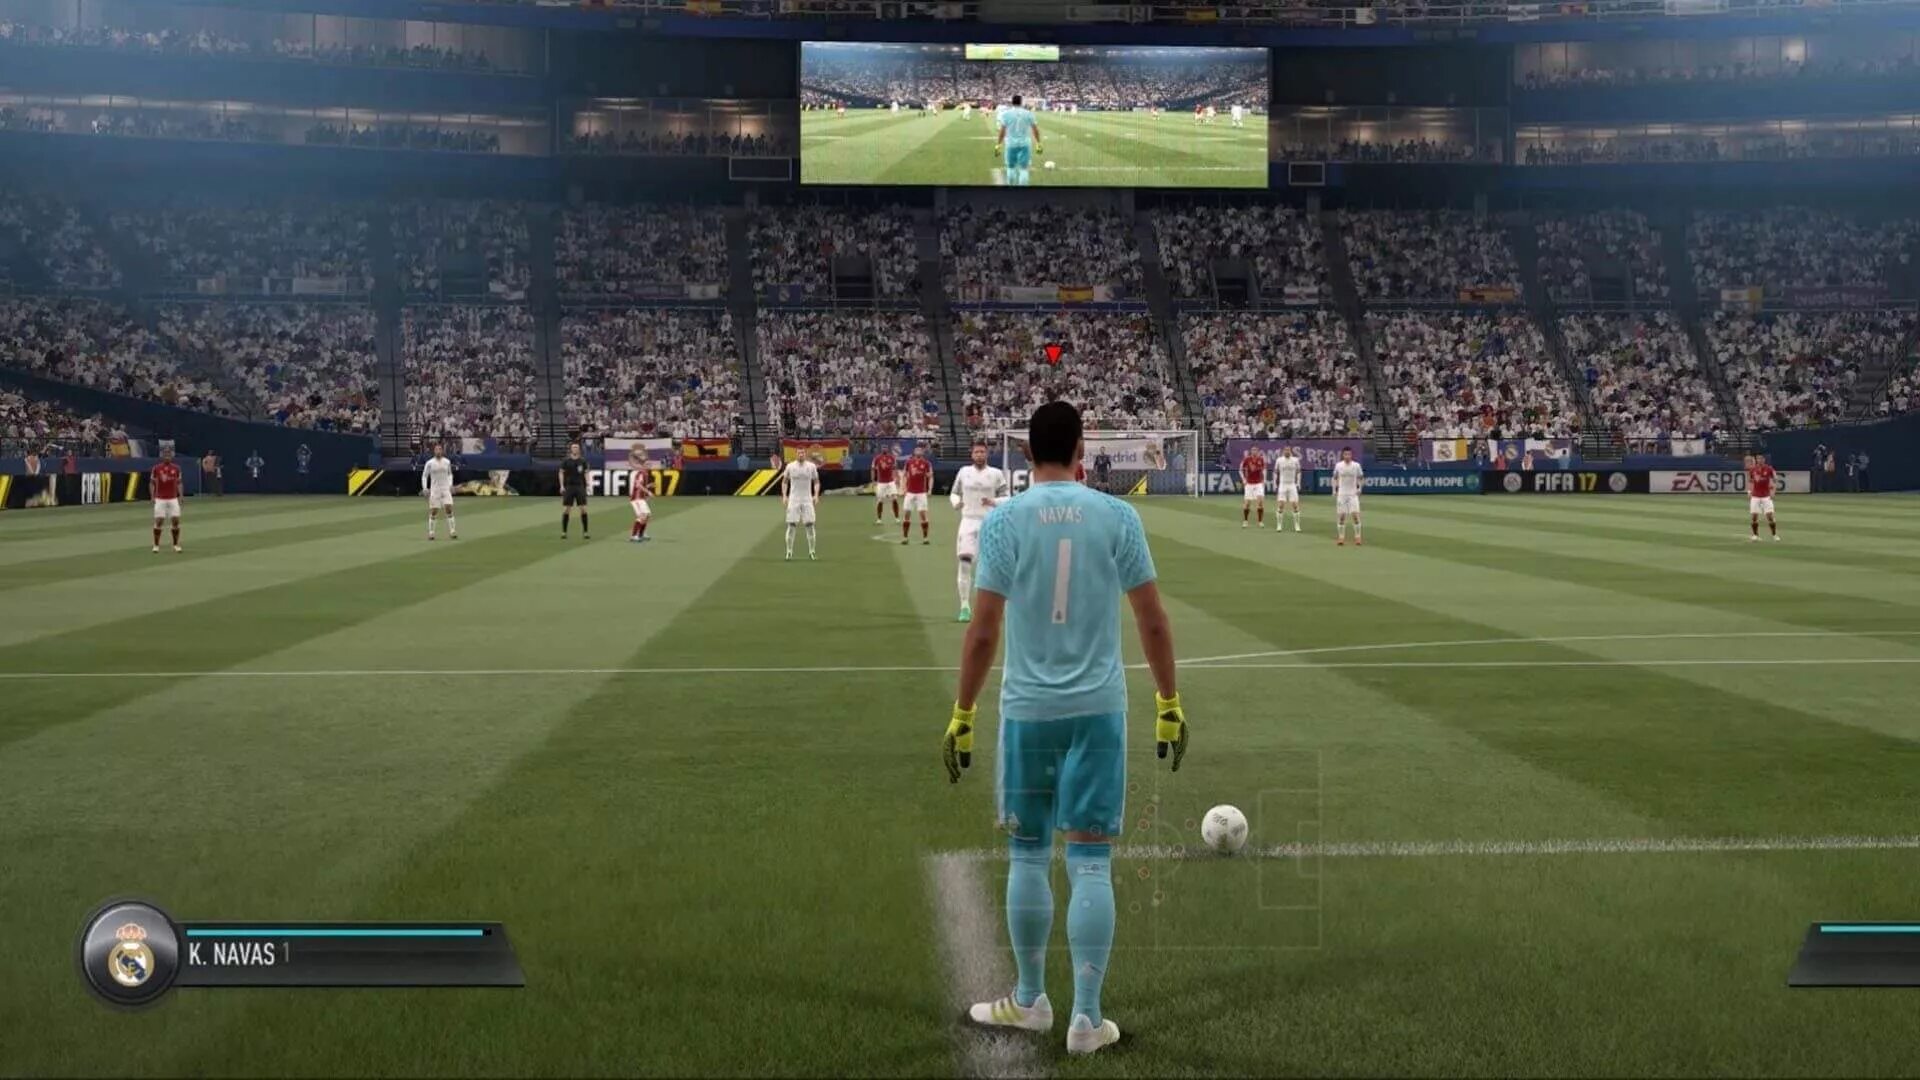 Fifa gameplay. FIFA 17 PC. ФИФА 17 геймплей. FIFA 17 Gameplay.